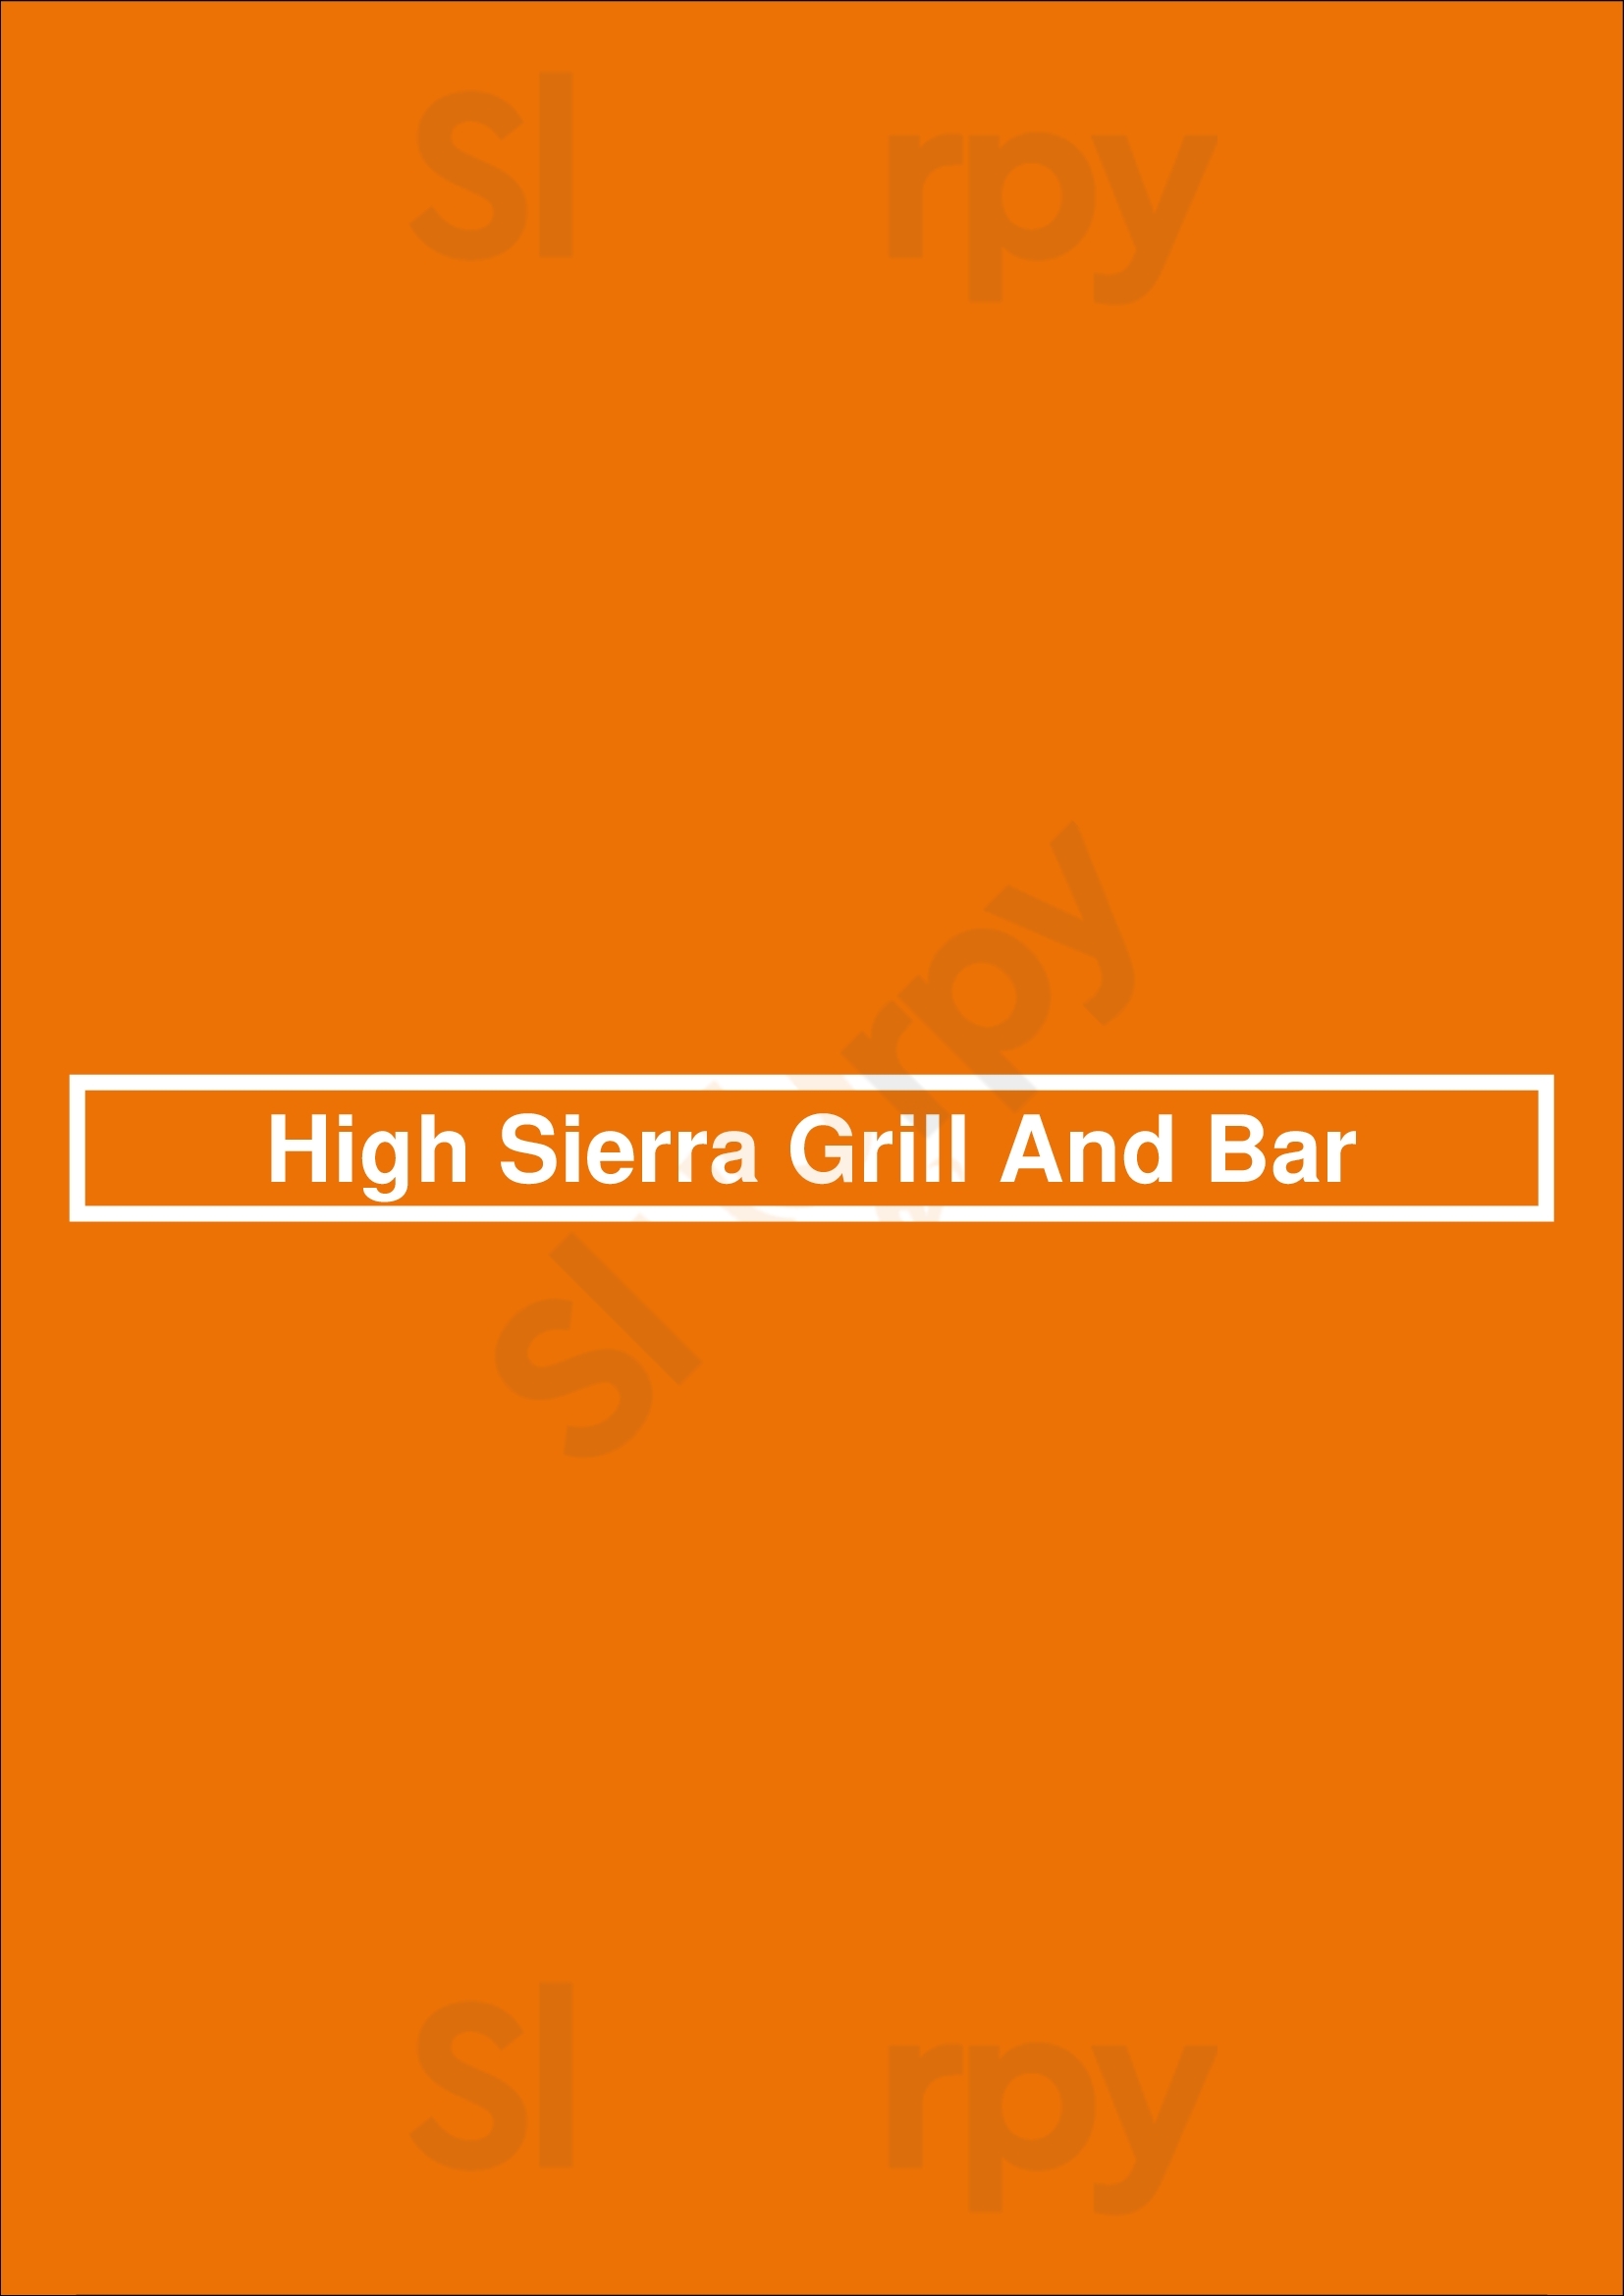 High Sierra Grill And Bar Fresno Menu - 1